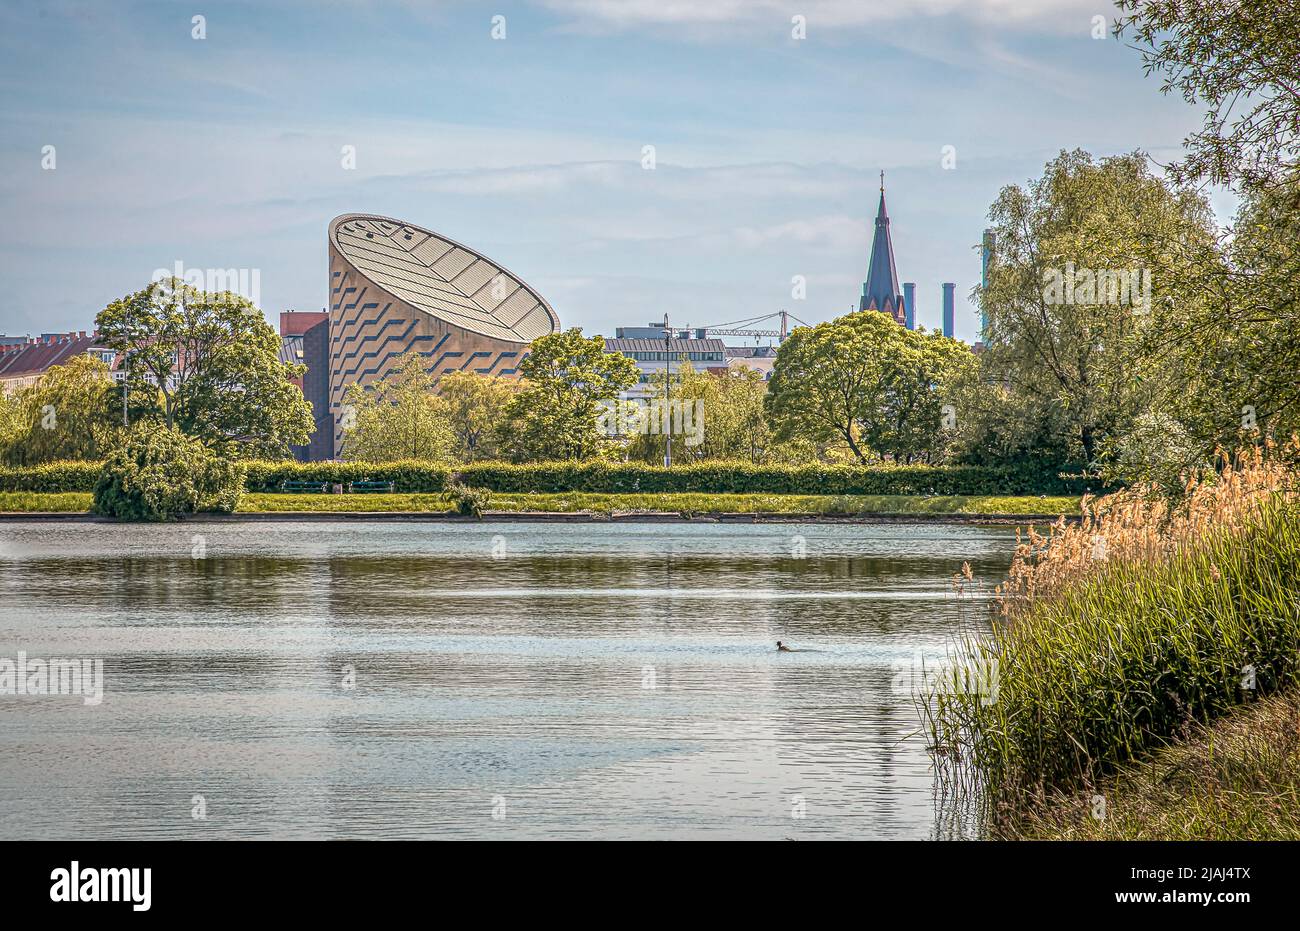 tycho brahe planetarium at the lakes in Copenhagen, May 25, 2019 Stock Photo